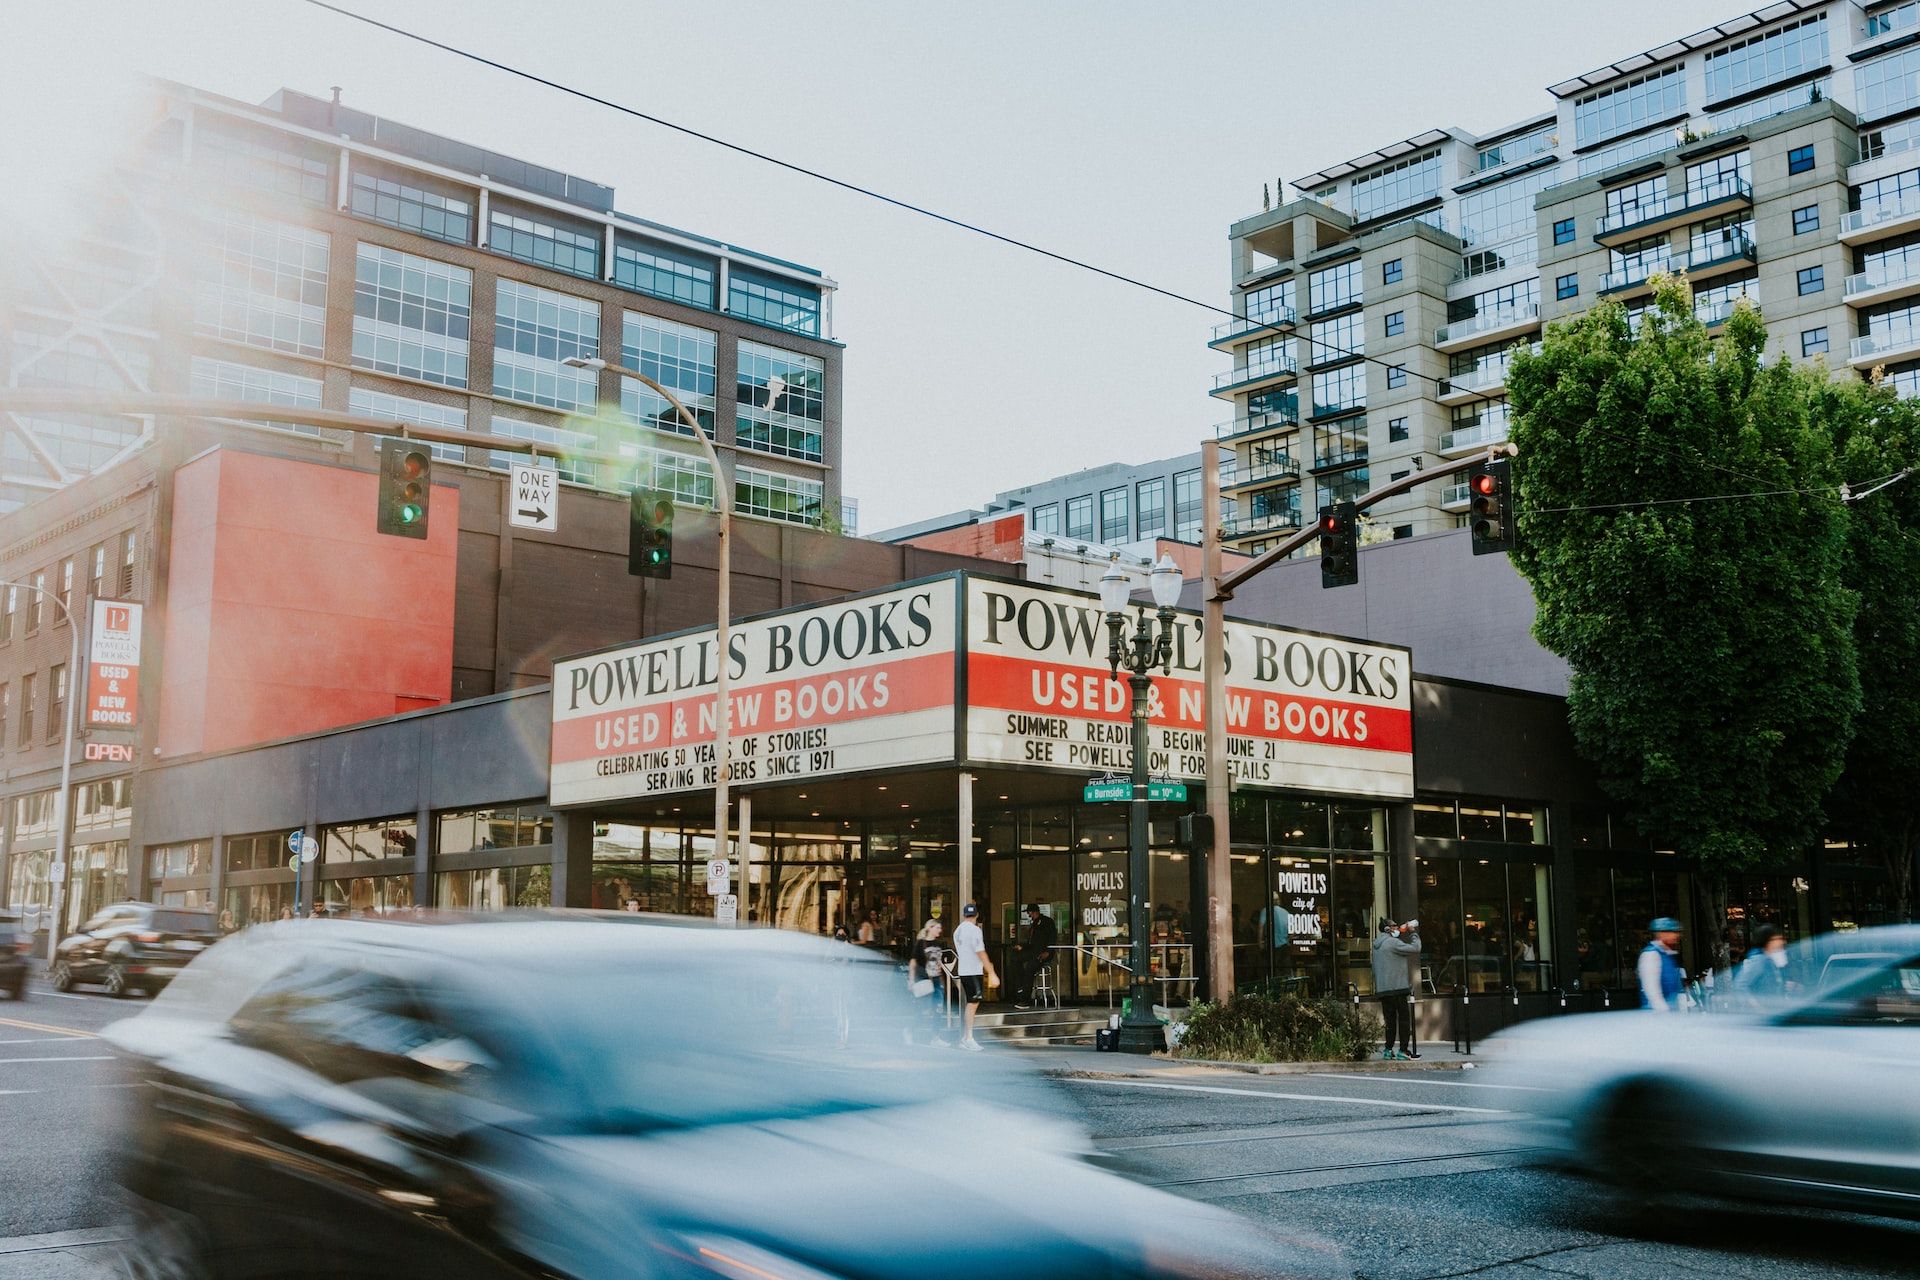 Powell's Books, West Burnside Street, Portland, OR, USA